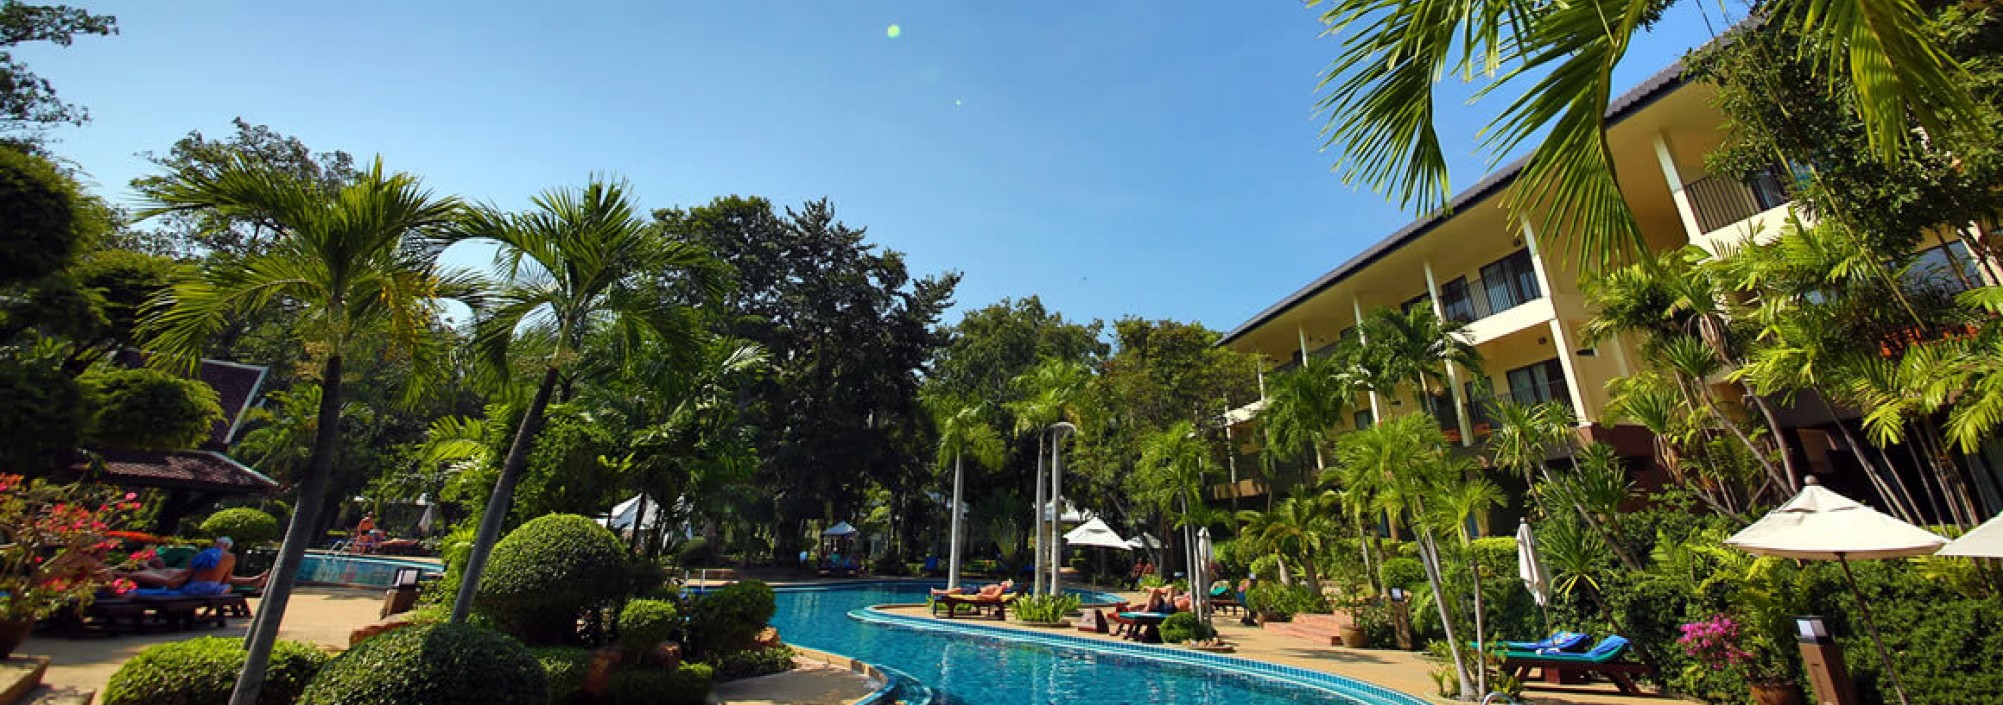 Green Park Resort - Hotels in Pattaya - Thailand Travel